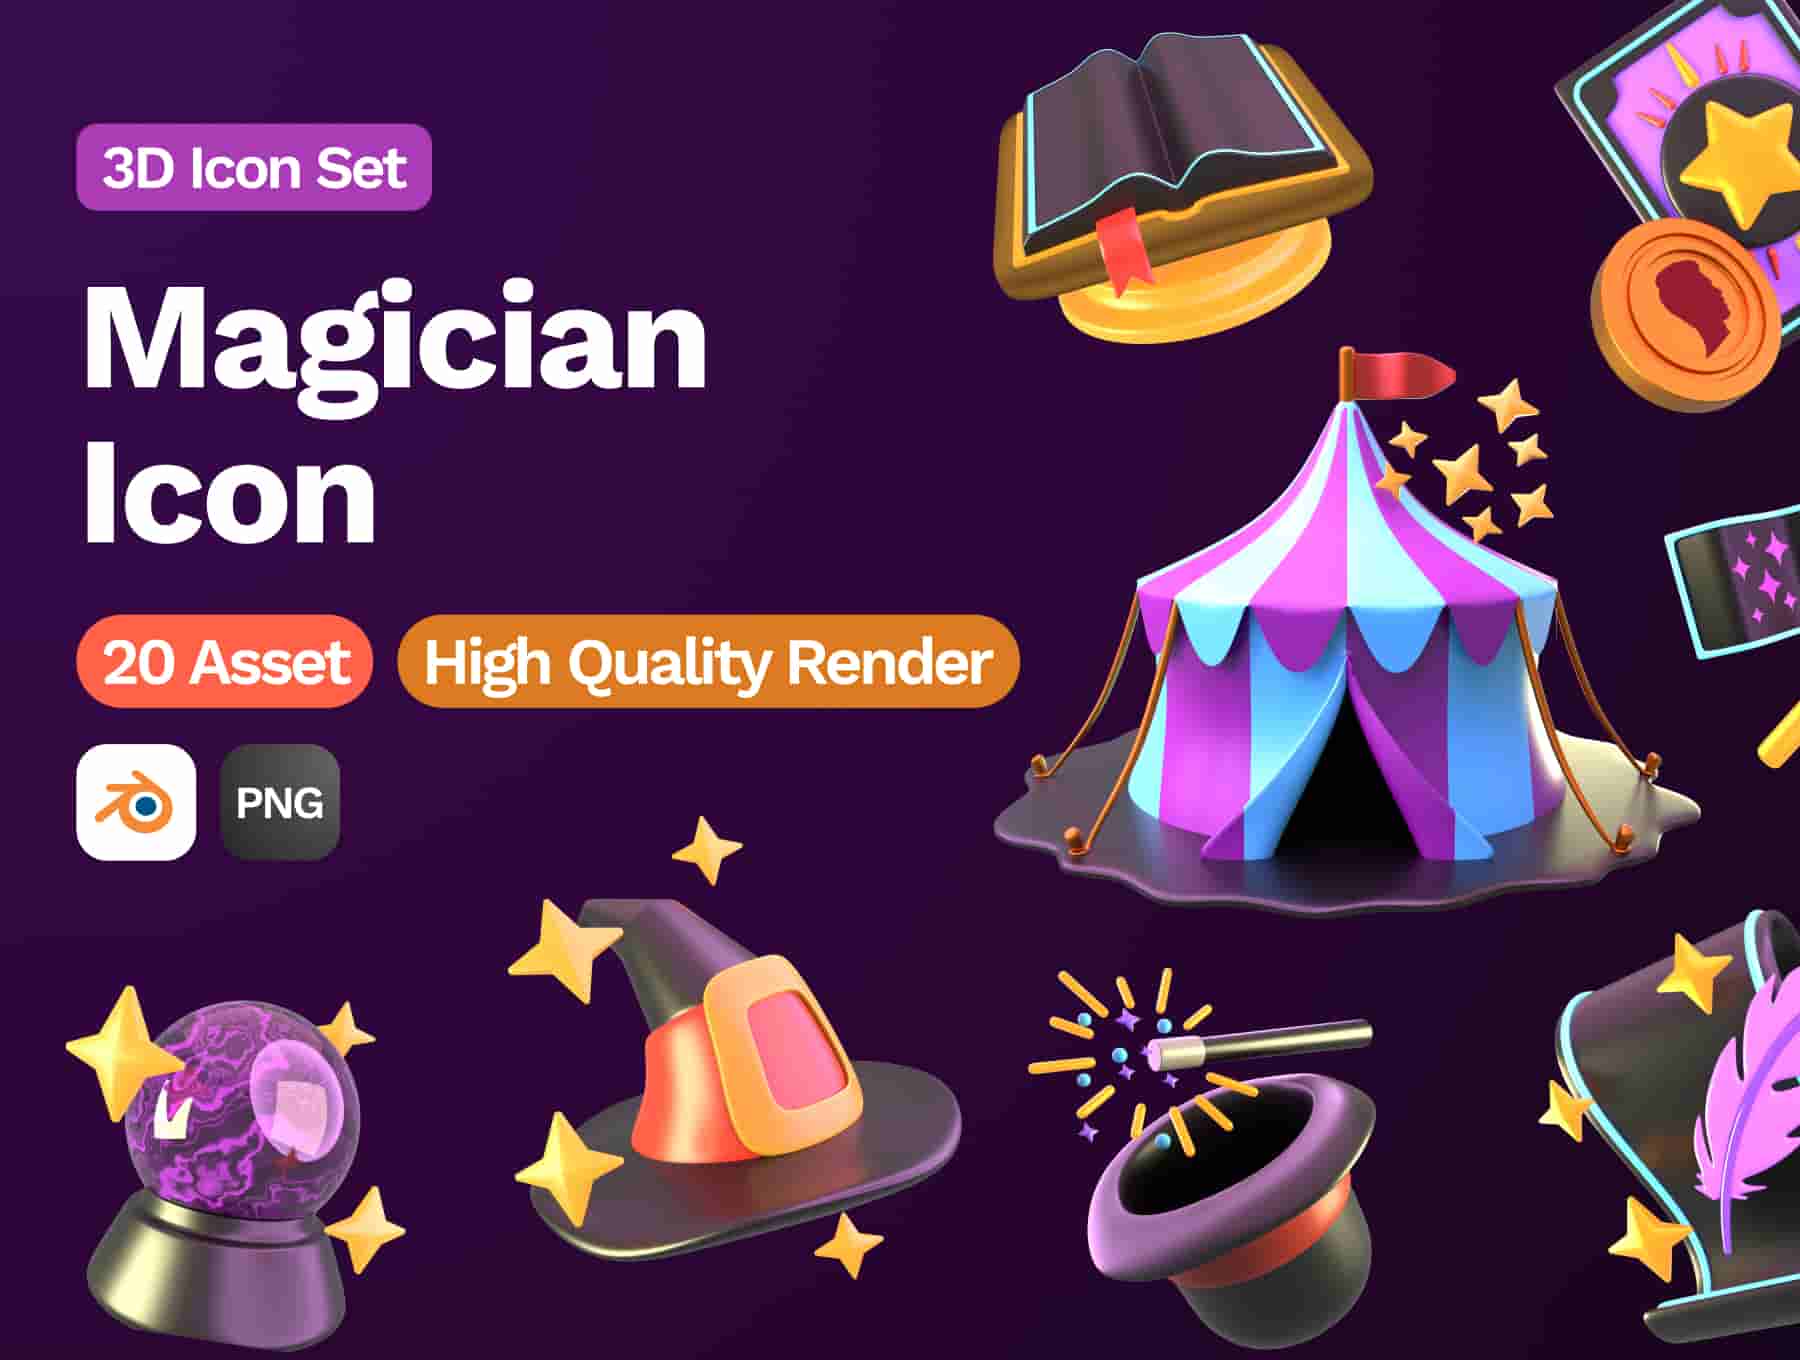 3D Magician Icon